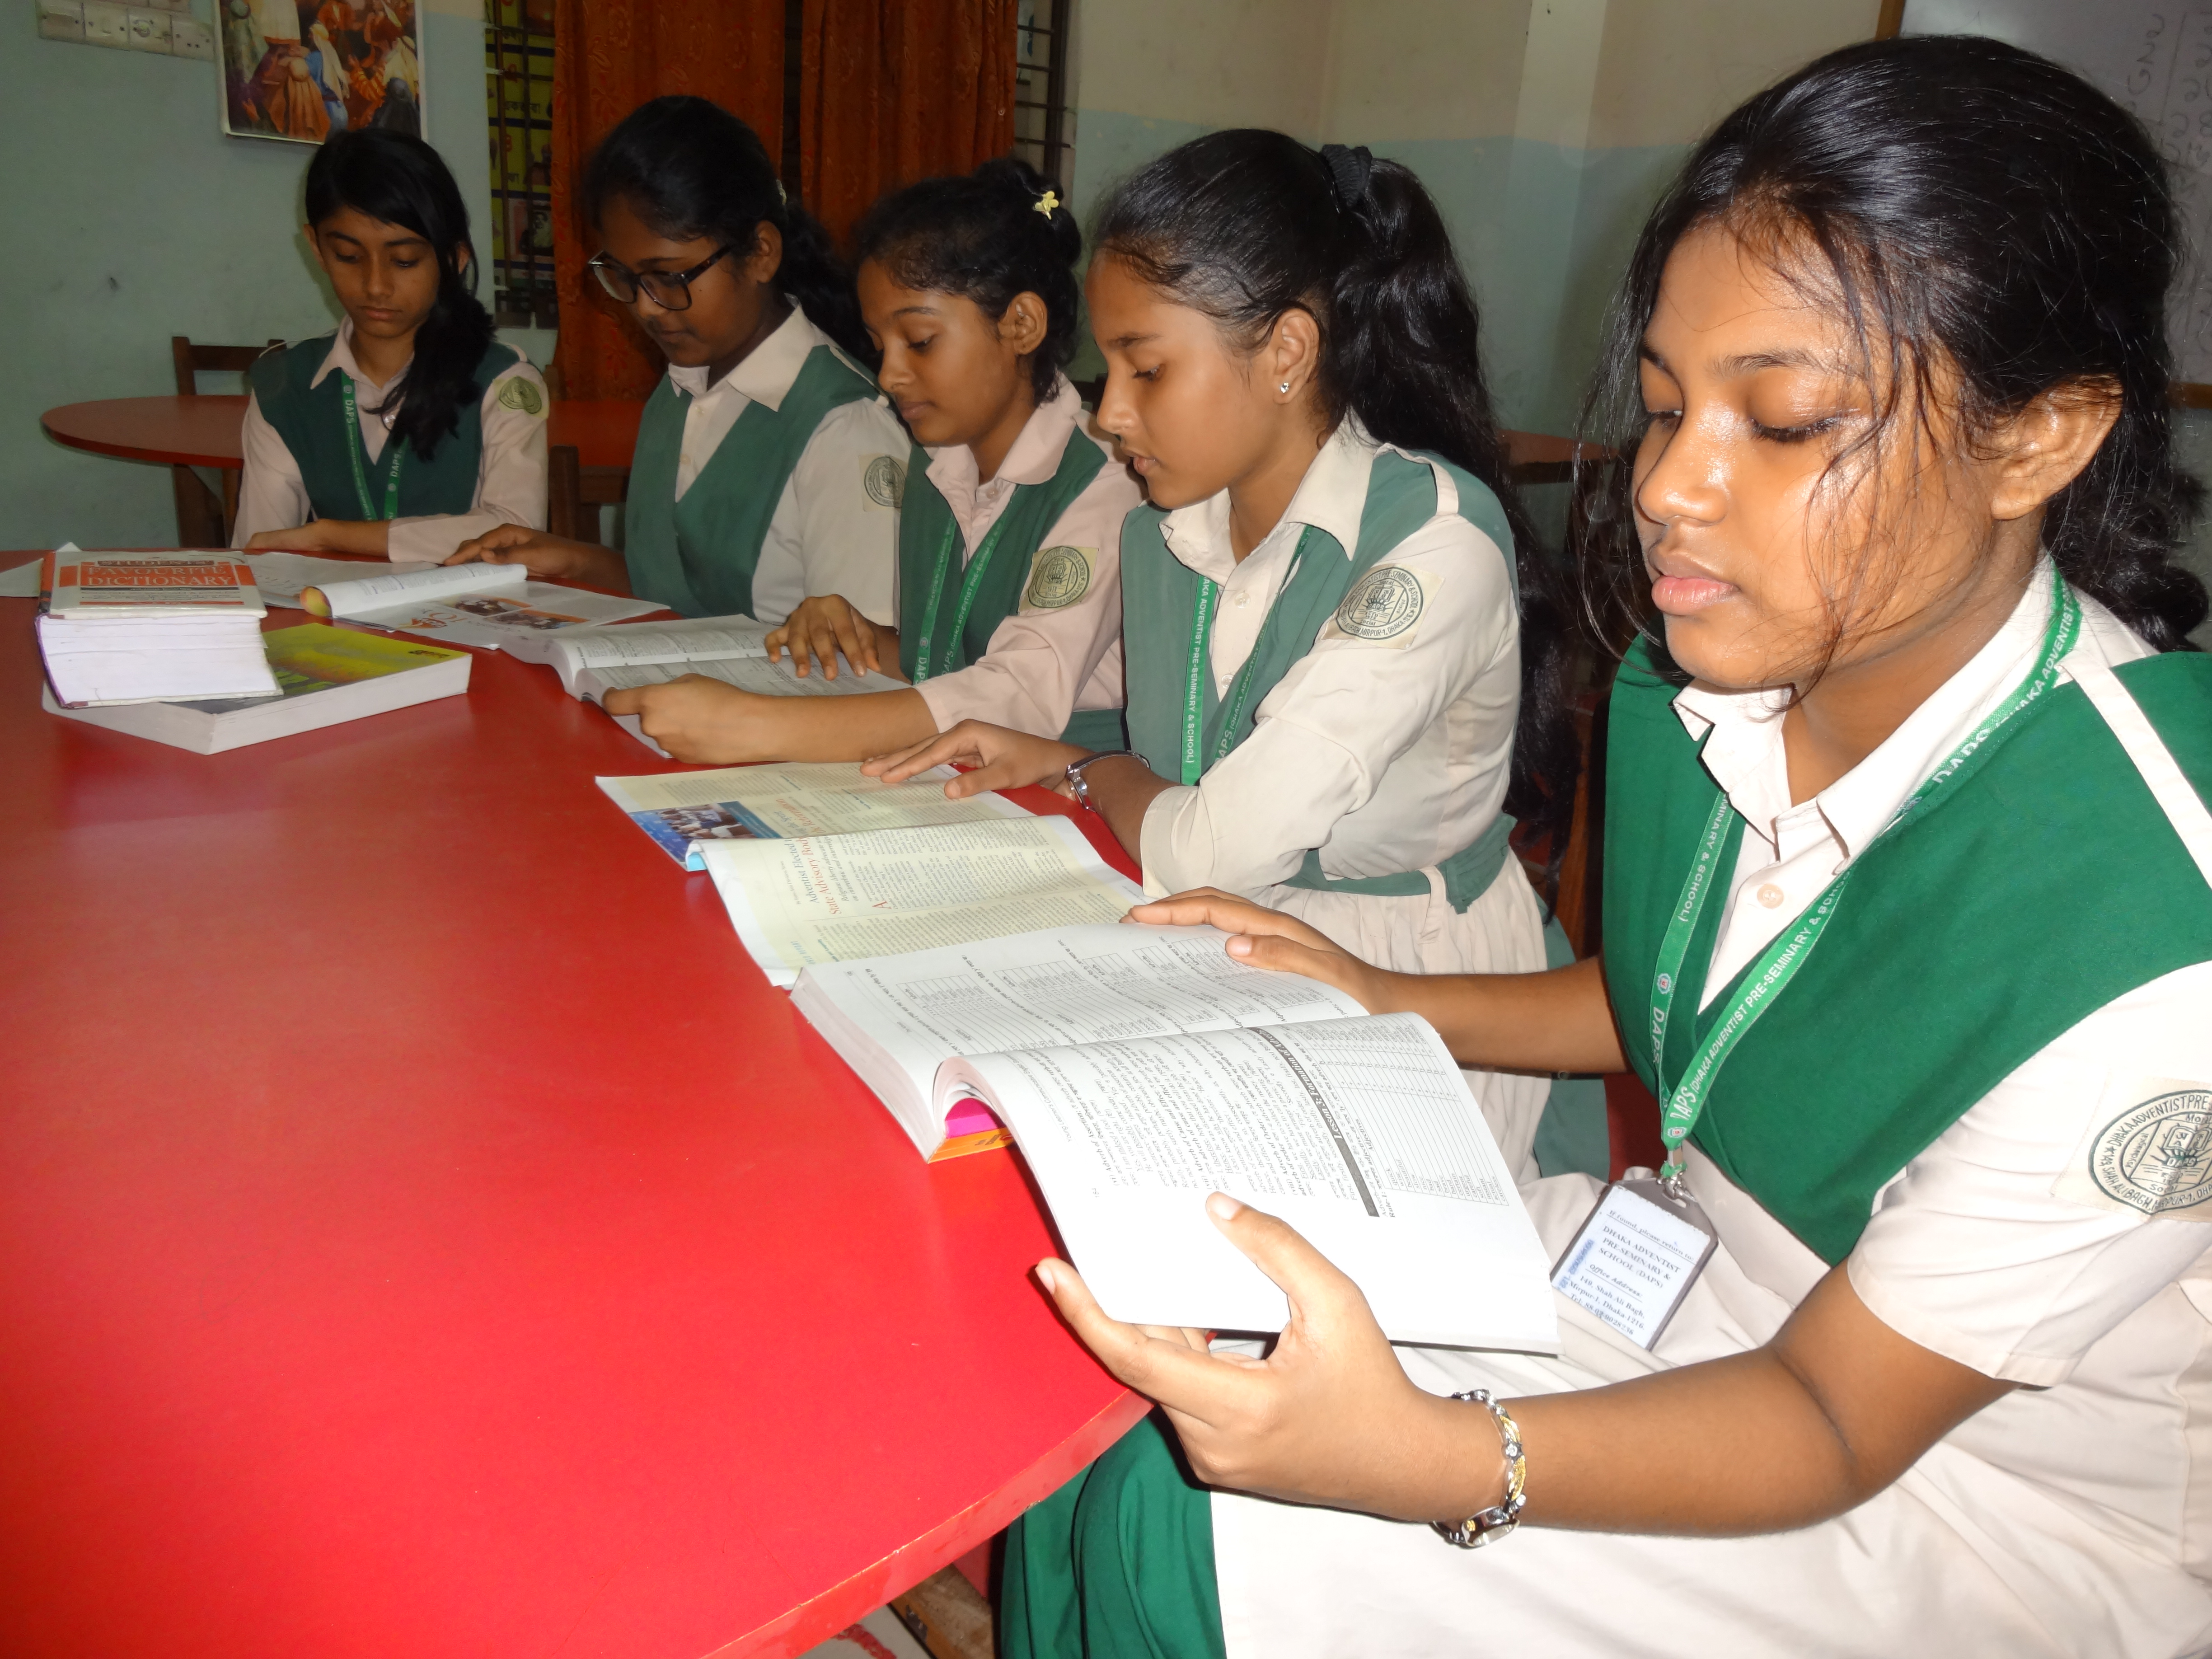  Dhaka Adventist Pre-Seminary and School Library